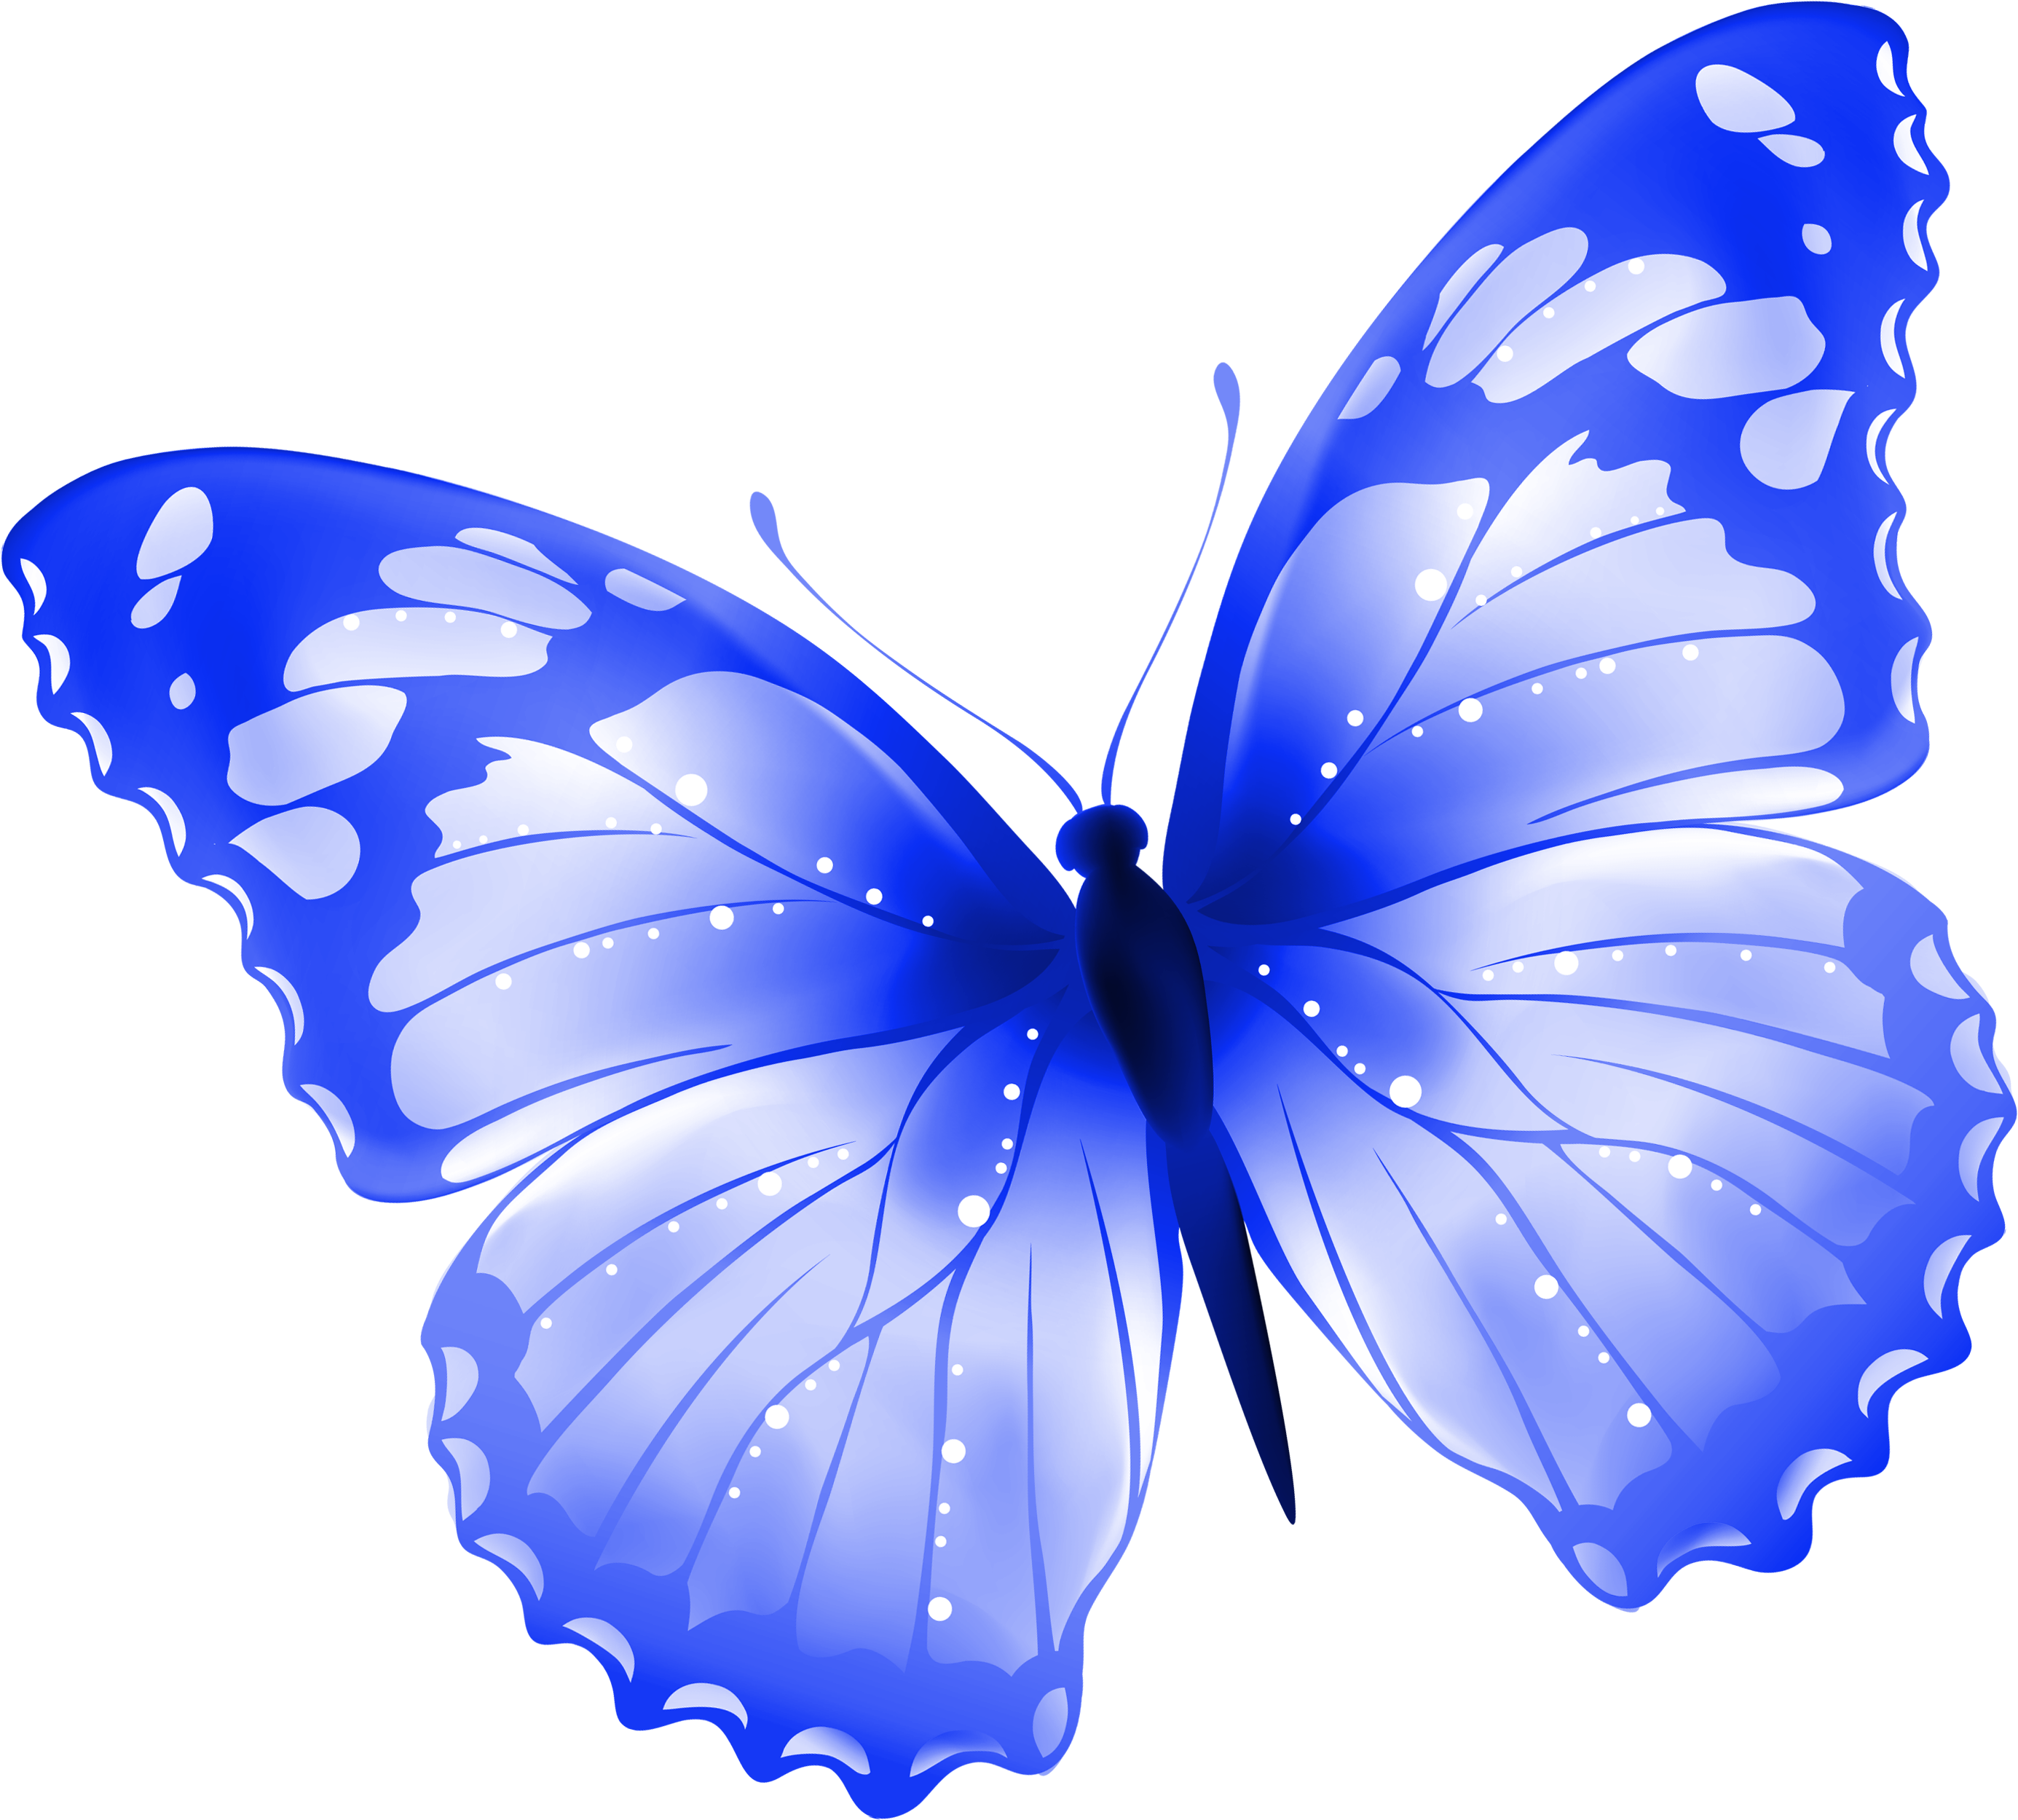 Картинки на прозрачной основе. Бабочки на белом фоне. Картинка бабочка на прозрачном фоне. Бабочки на просроченном фоне. Синие бабочки на прозрачном фоне.